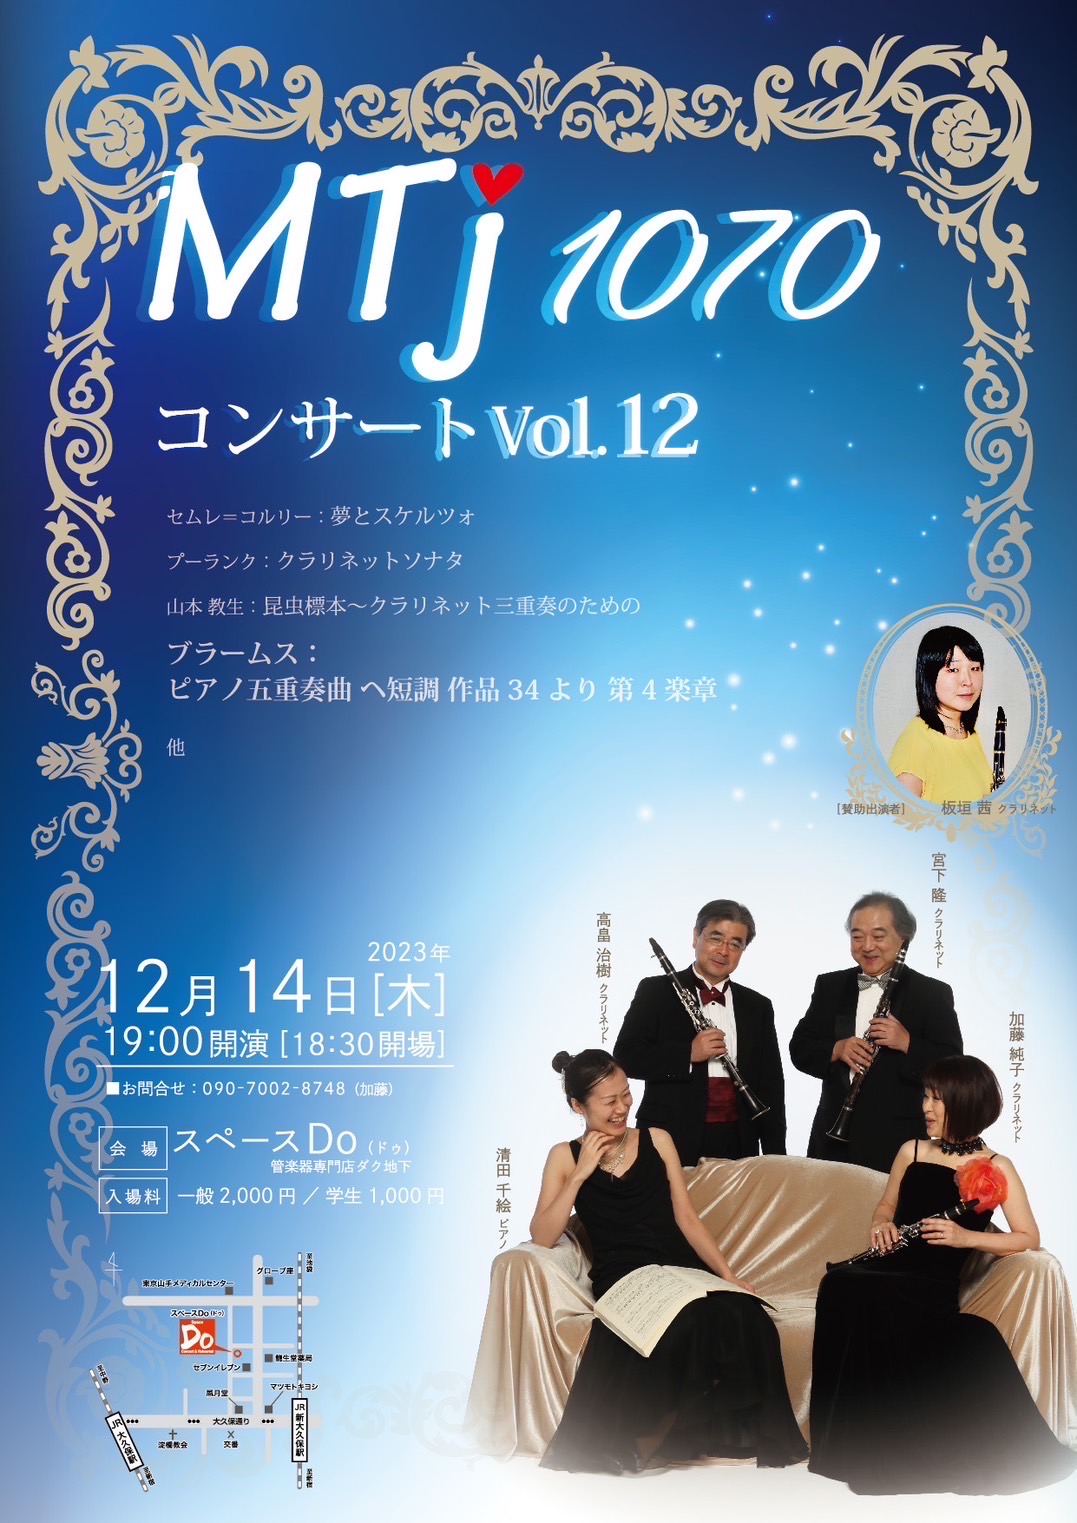 MTJ1070 コンサートVol.12